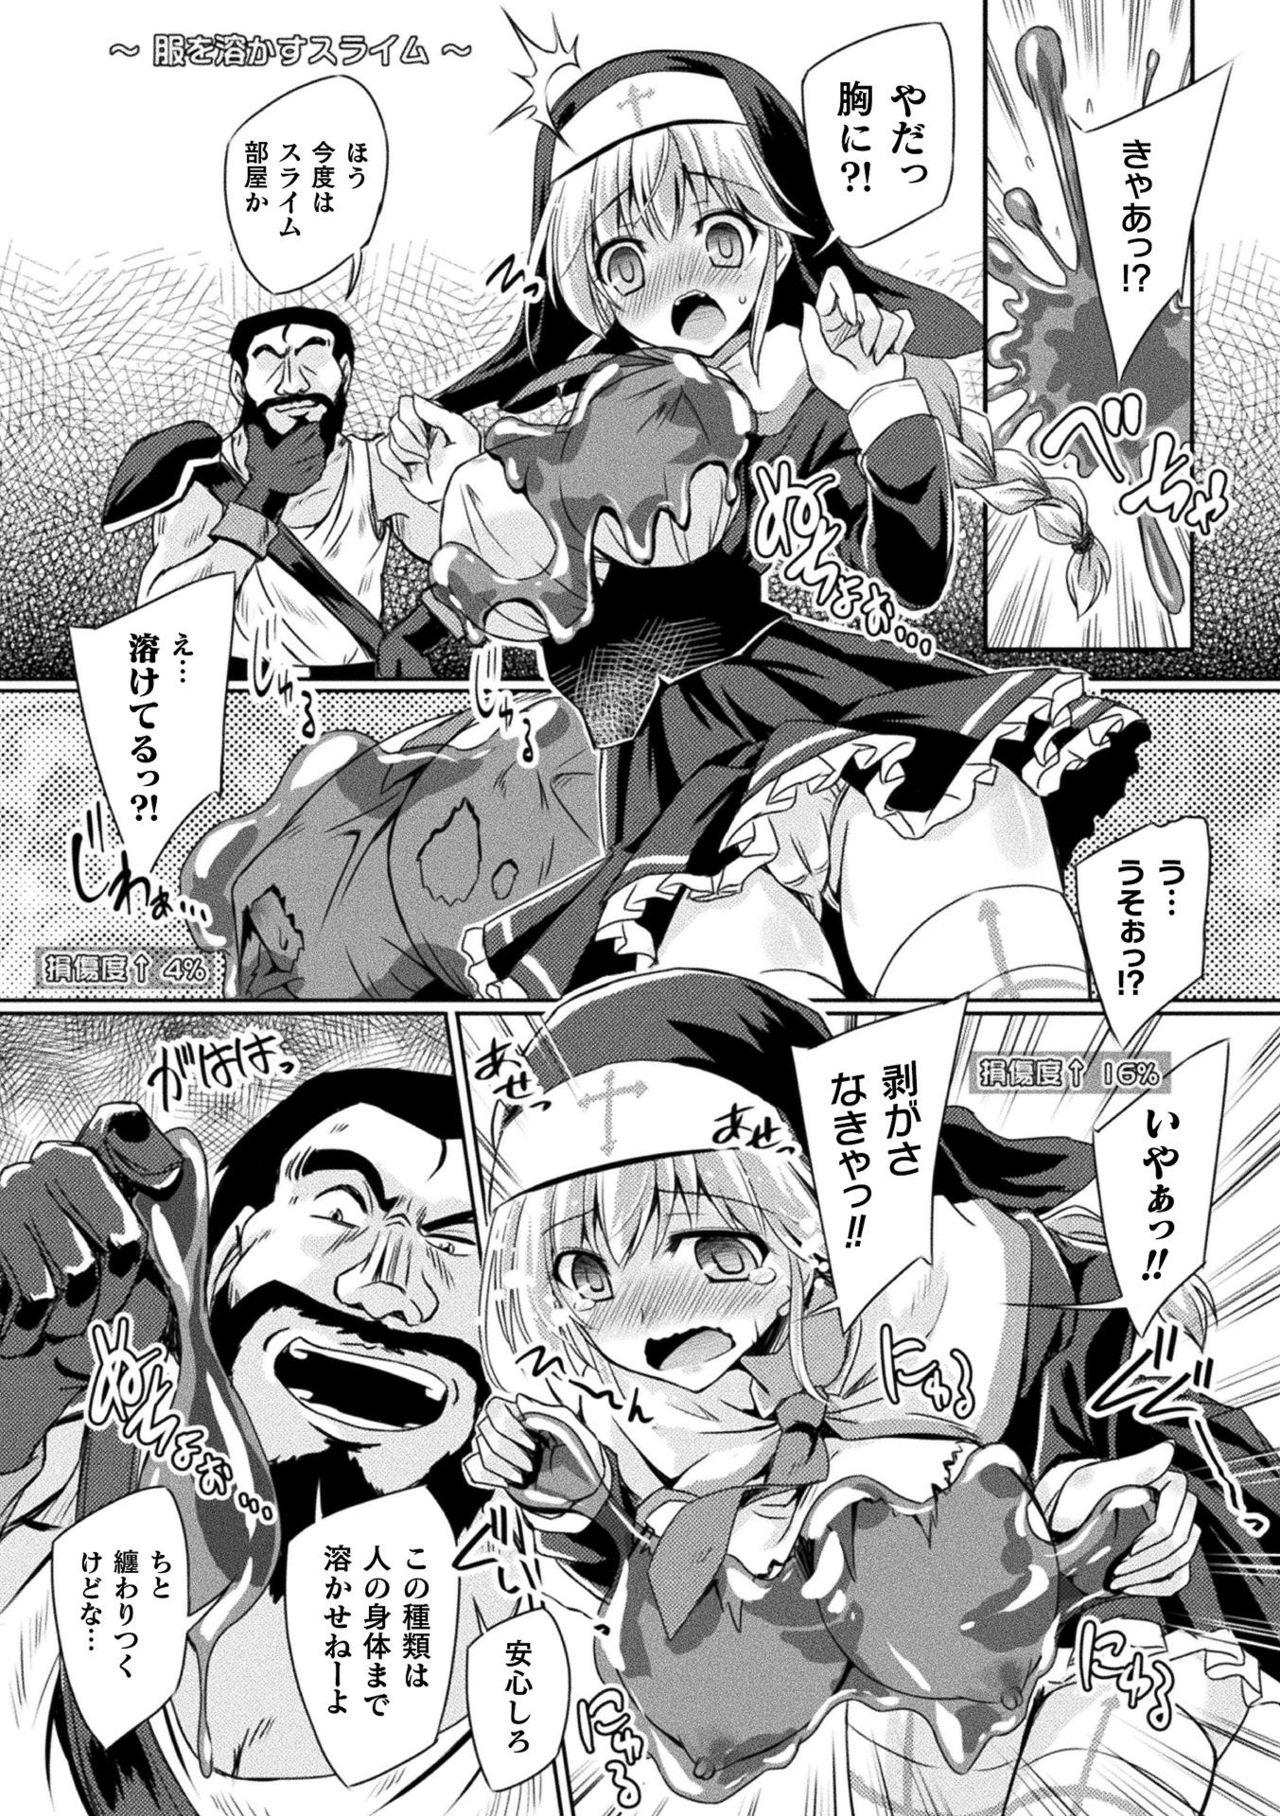 2D Comic Magazine Zecchou Kairaku ga Tomaranai Ero-Trap Dungeon Vol. 1 29